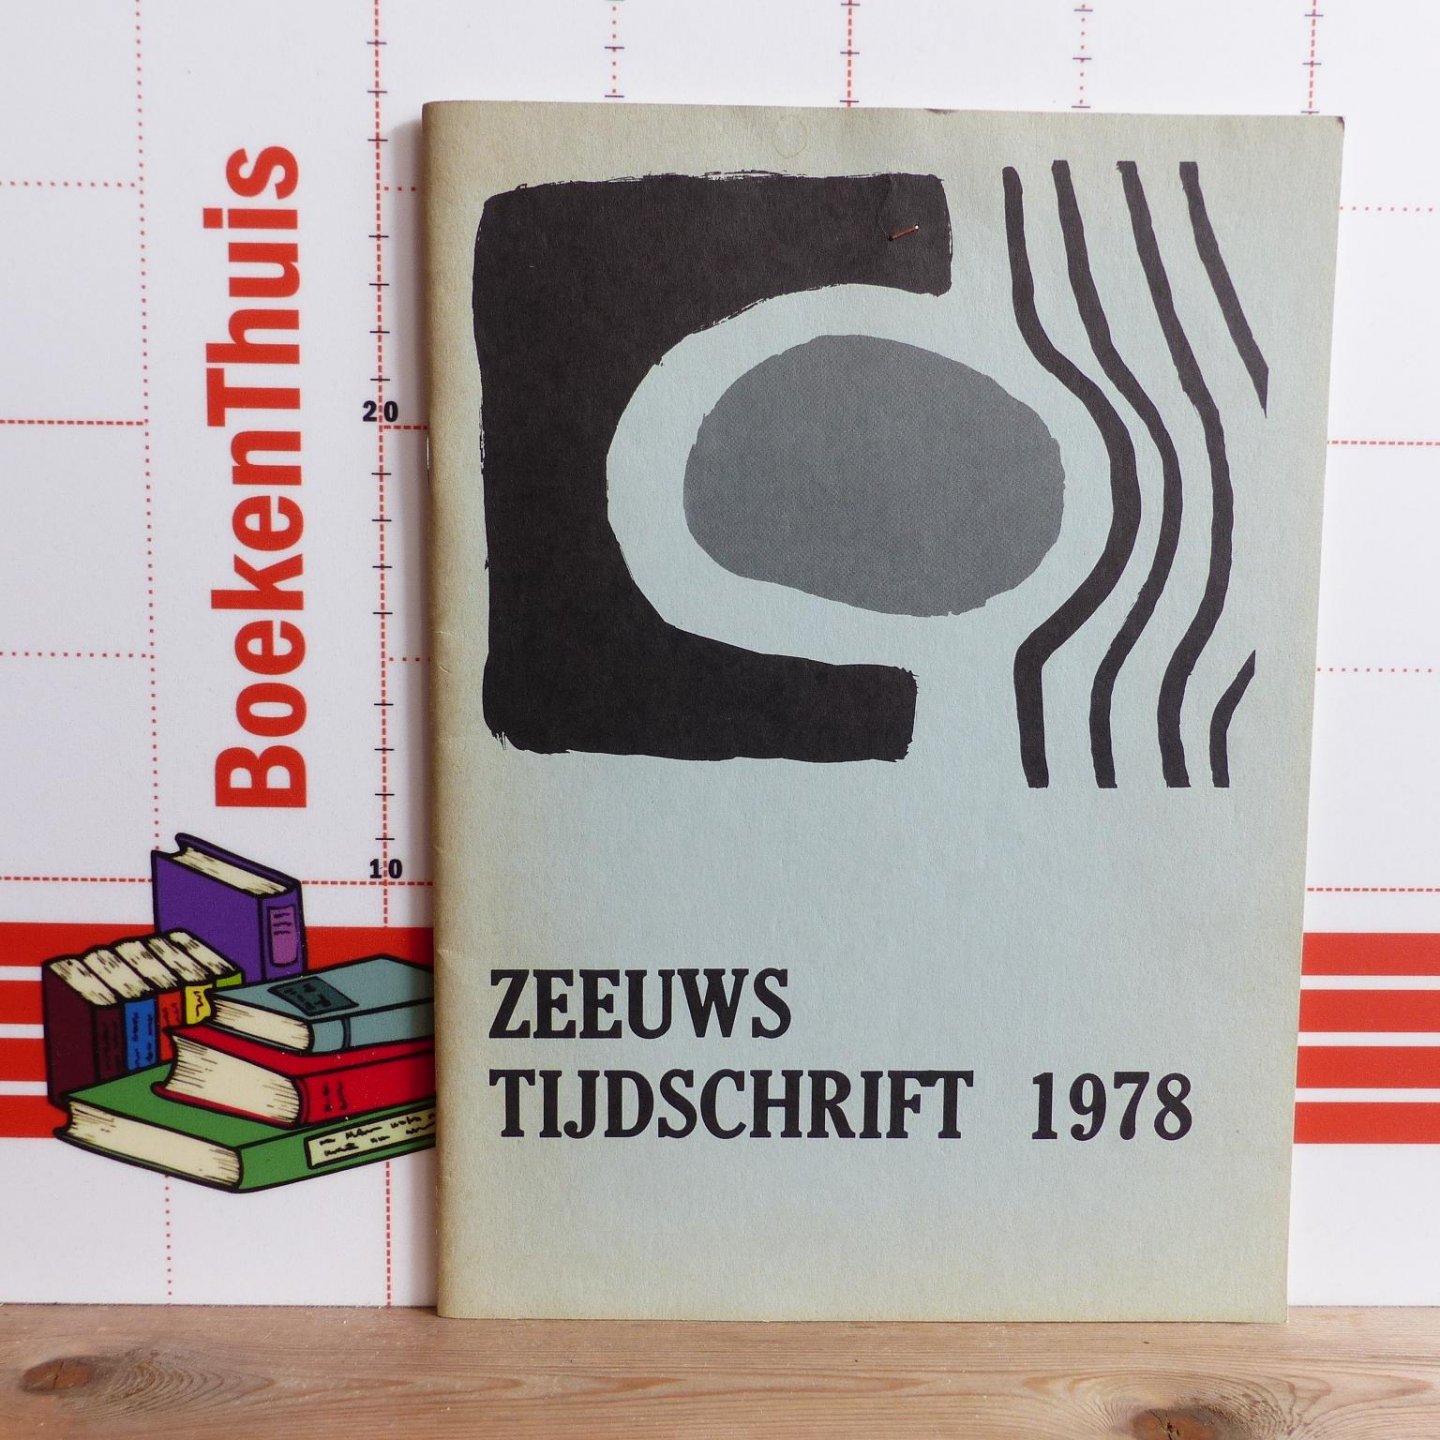 Borst. A.L.A. - Cijsouw, K. - Oosten, T. van - Oosthoek, A. - Timpe Burger, J.A. - Verburg, M.C. - Warren, H. - Zeeuws tijdschrift 1978